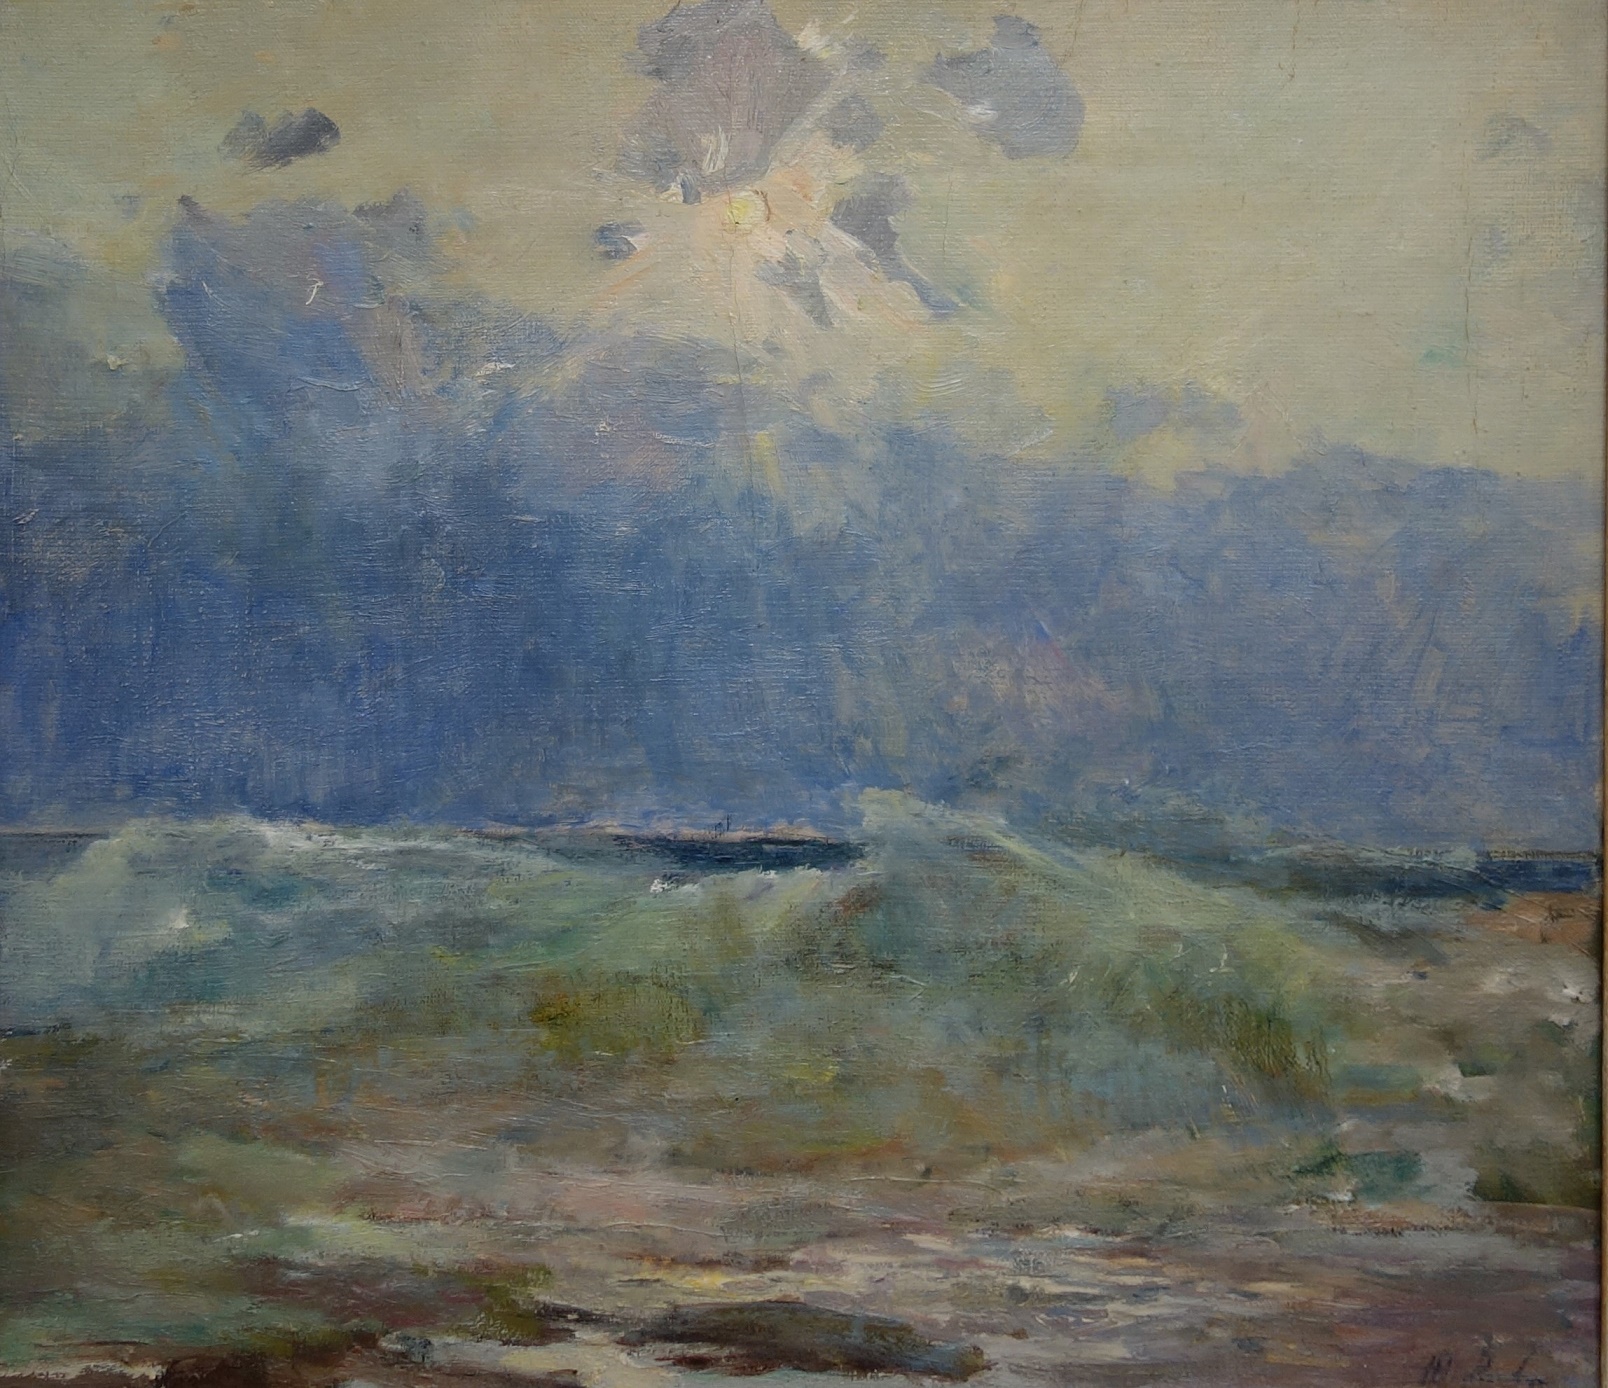 Joukov, Russian painting, Russian post impressionism, sea, seascape